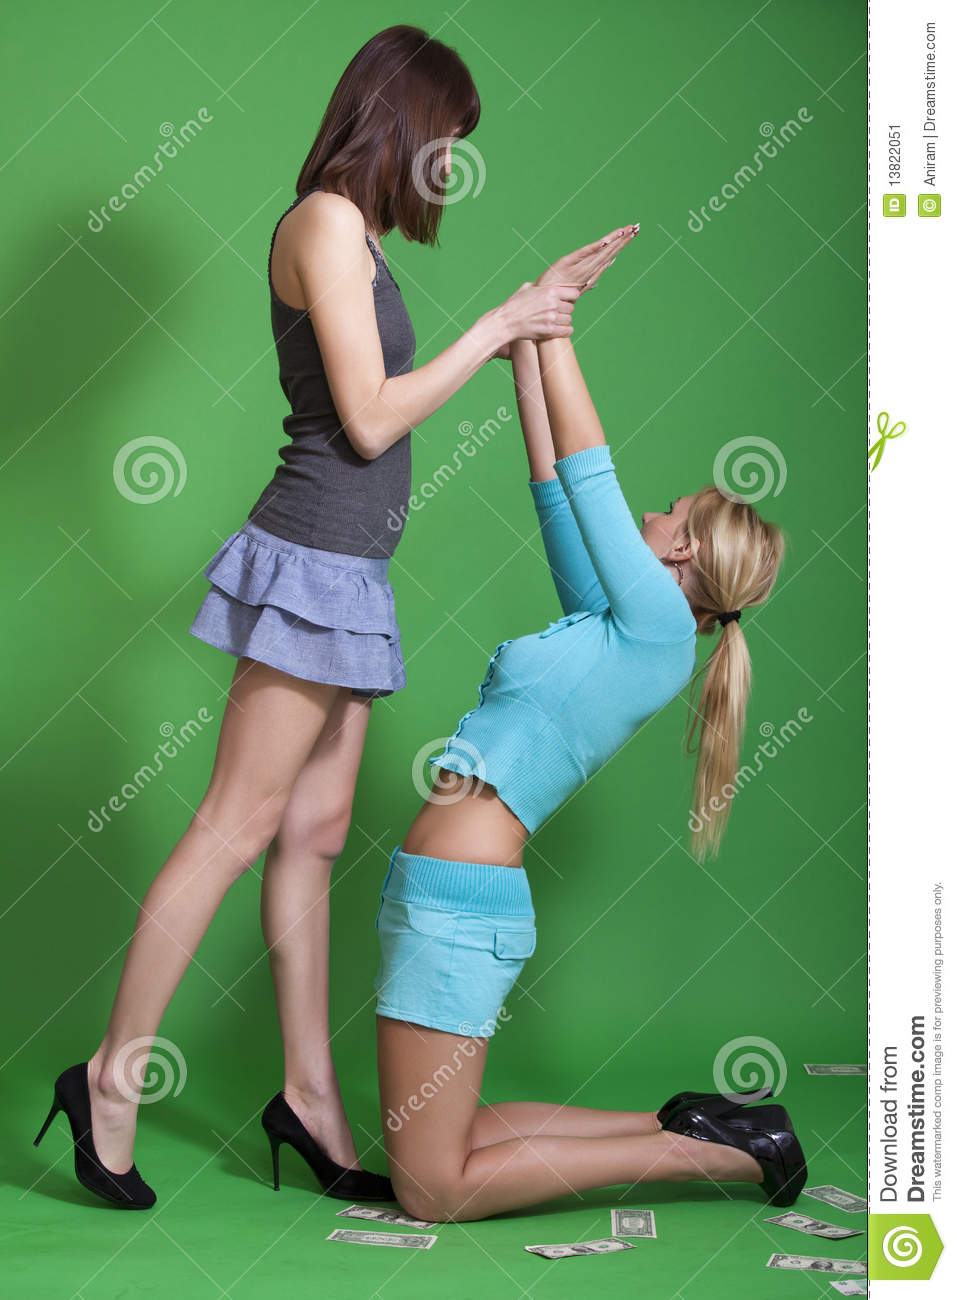 Women Fighting Over Money Stock Image   Image  13822051